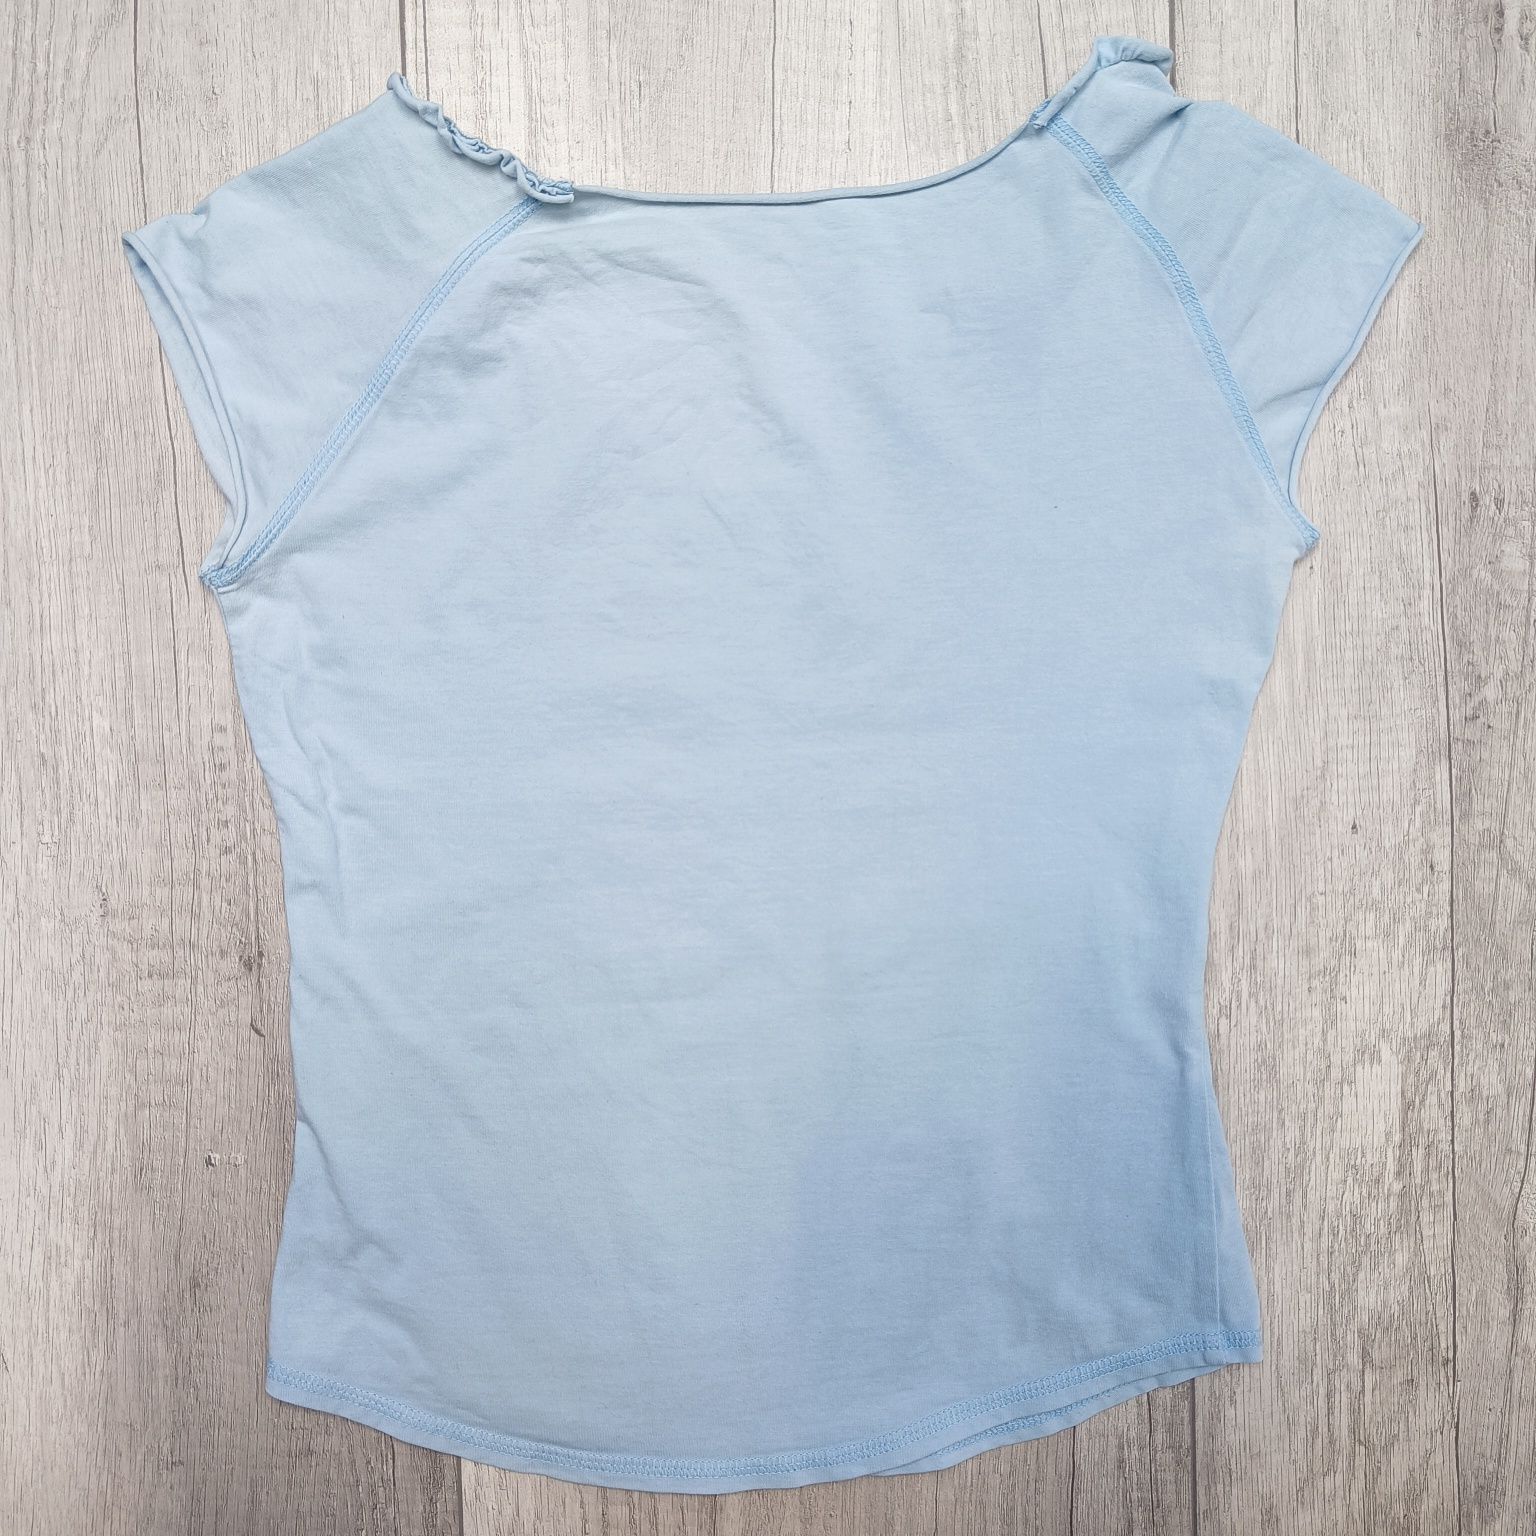 Niebieska bluzka damska na krótki rękaw, koszulka, Big Star, M / 38